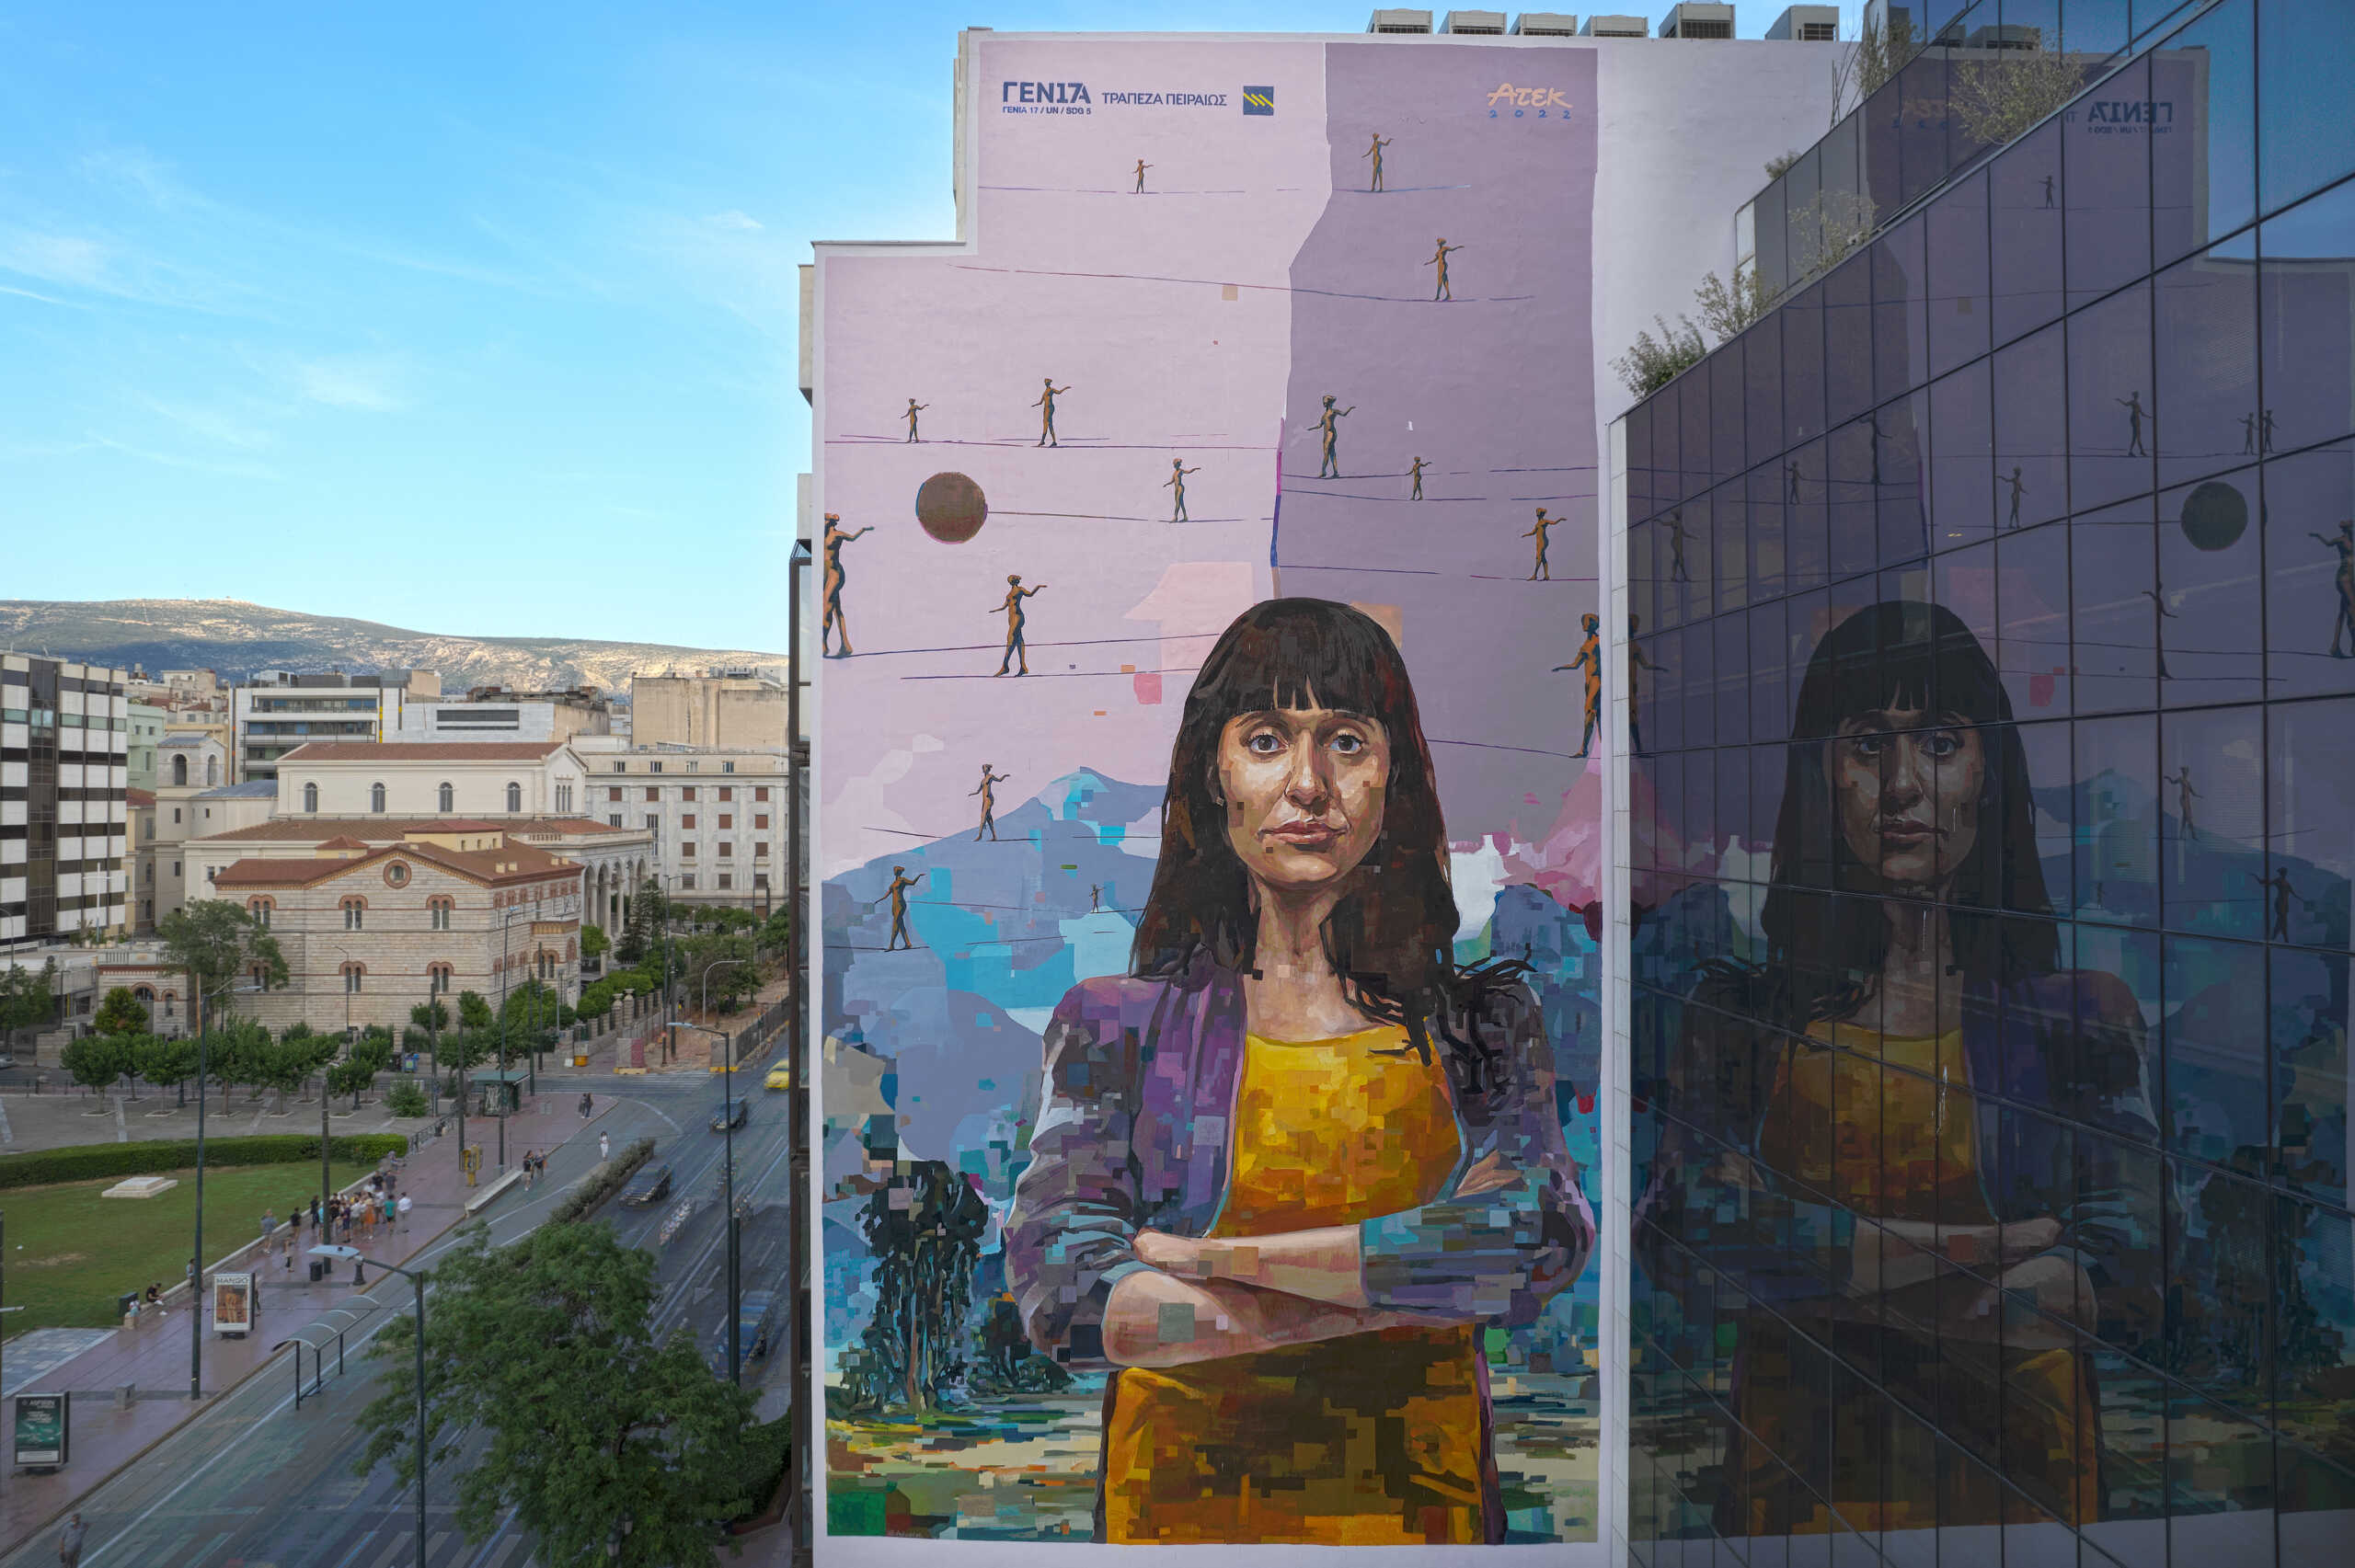 To mural στο κέντρο της Αθήνας στέλνει ισχυρό μήνυμα για την ισότητα των φύλων